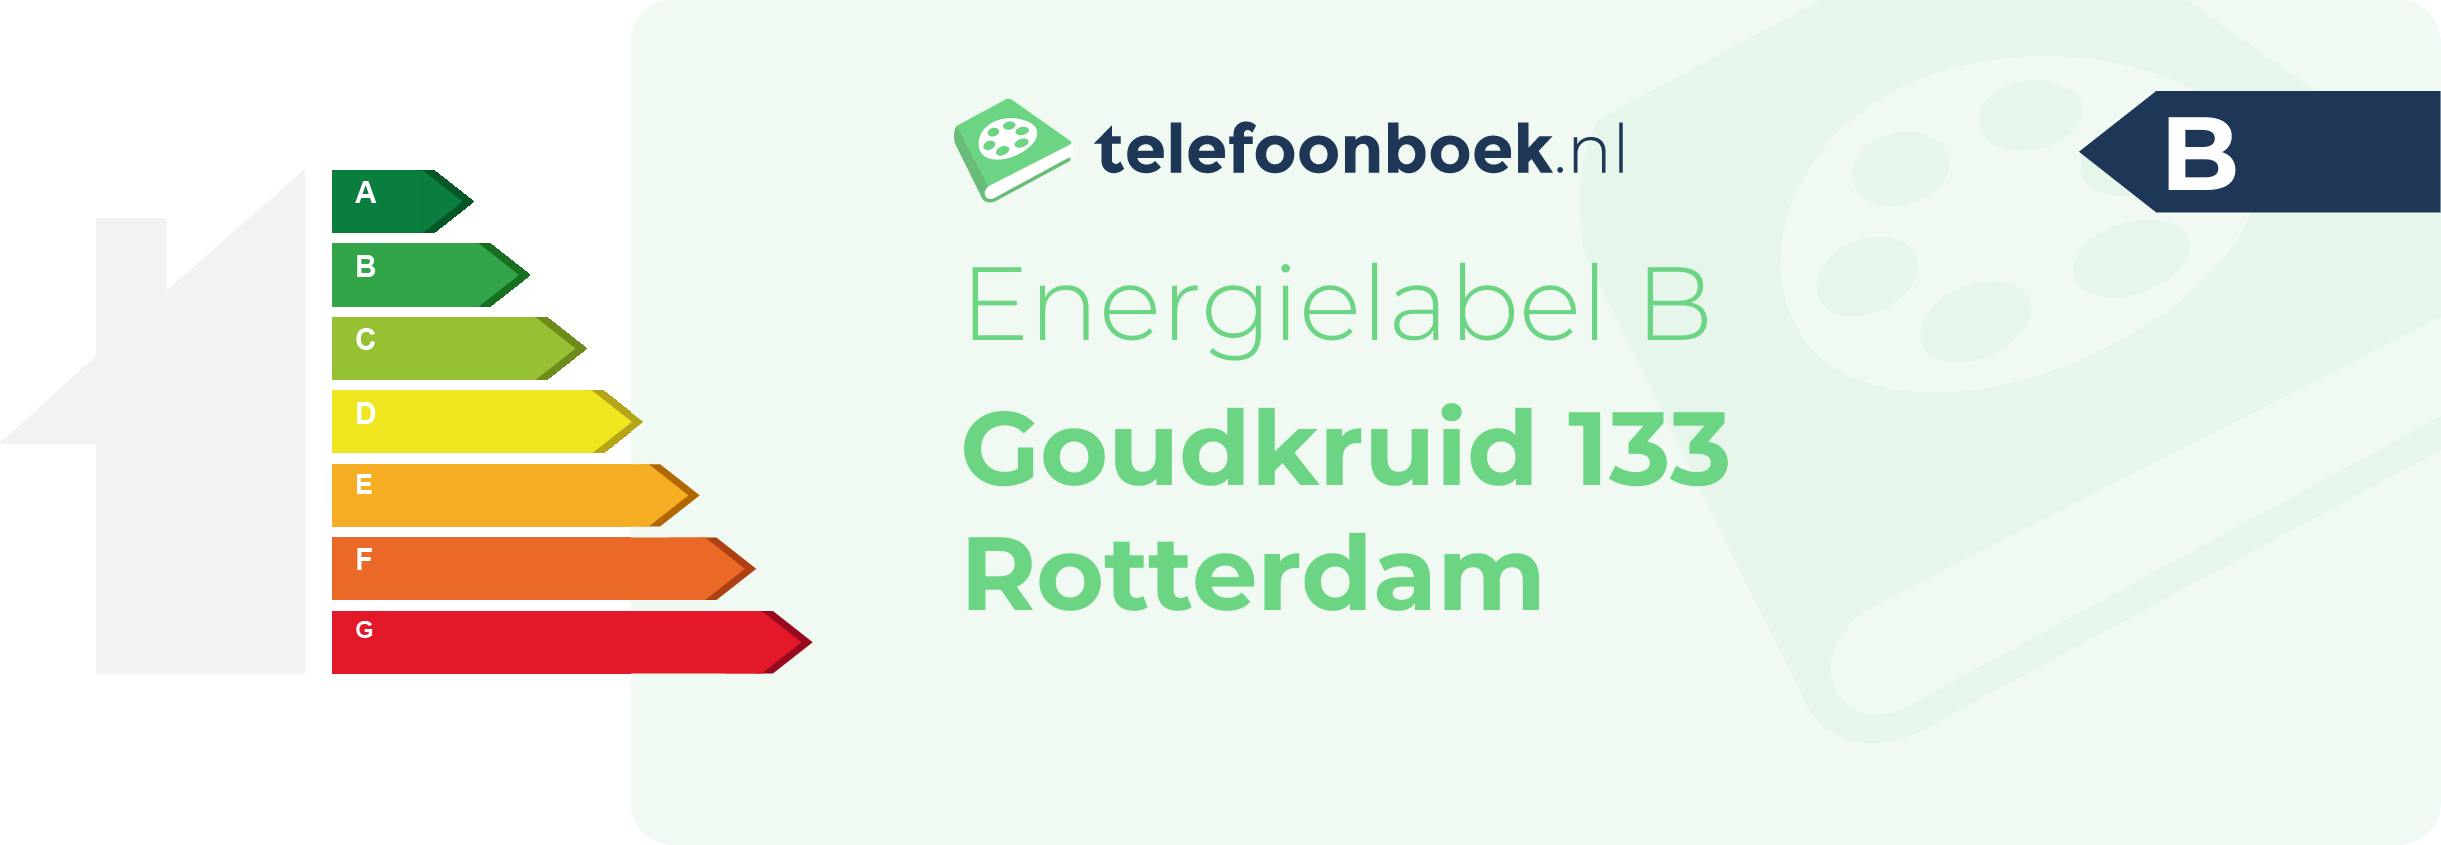 Energielabel Goudkruid 133 Rotterdam